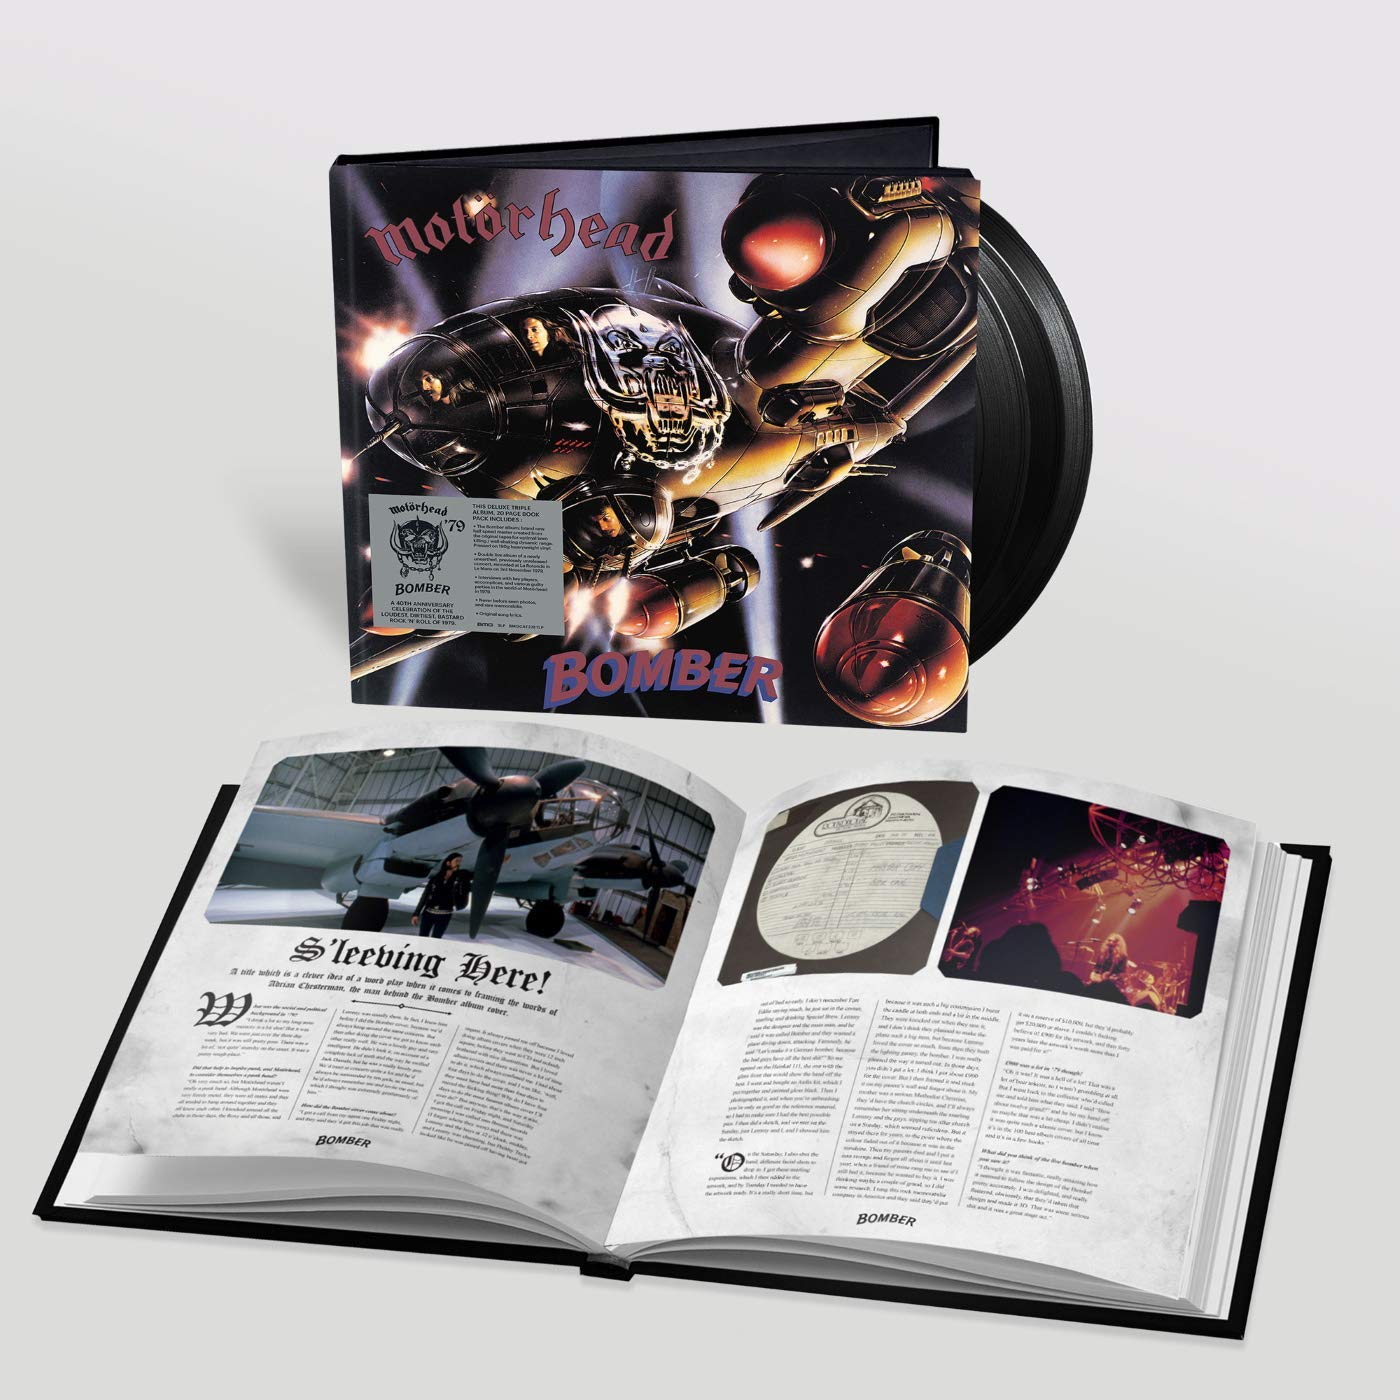 Motorhead "Bomber" Deluxe 3x12" Vinyl w/ 20 Page Book